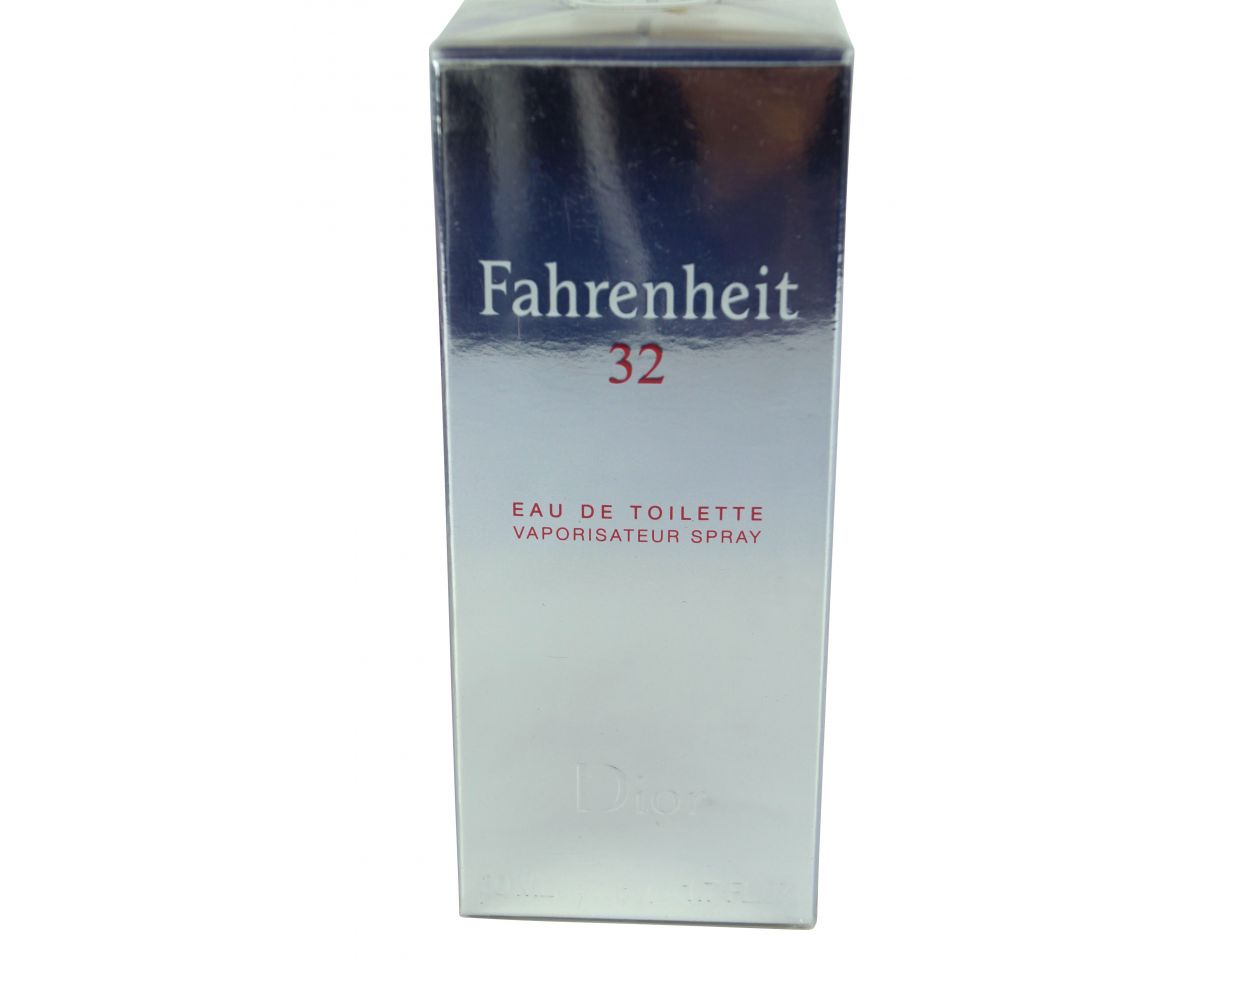 Fahrenheit 32 Dior cologne - a fragrance for men 2007